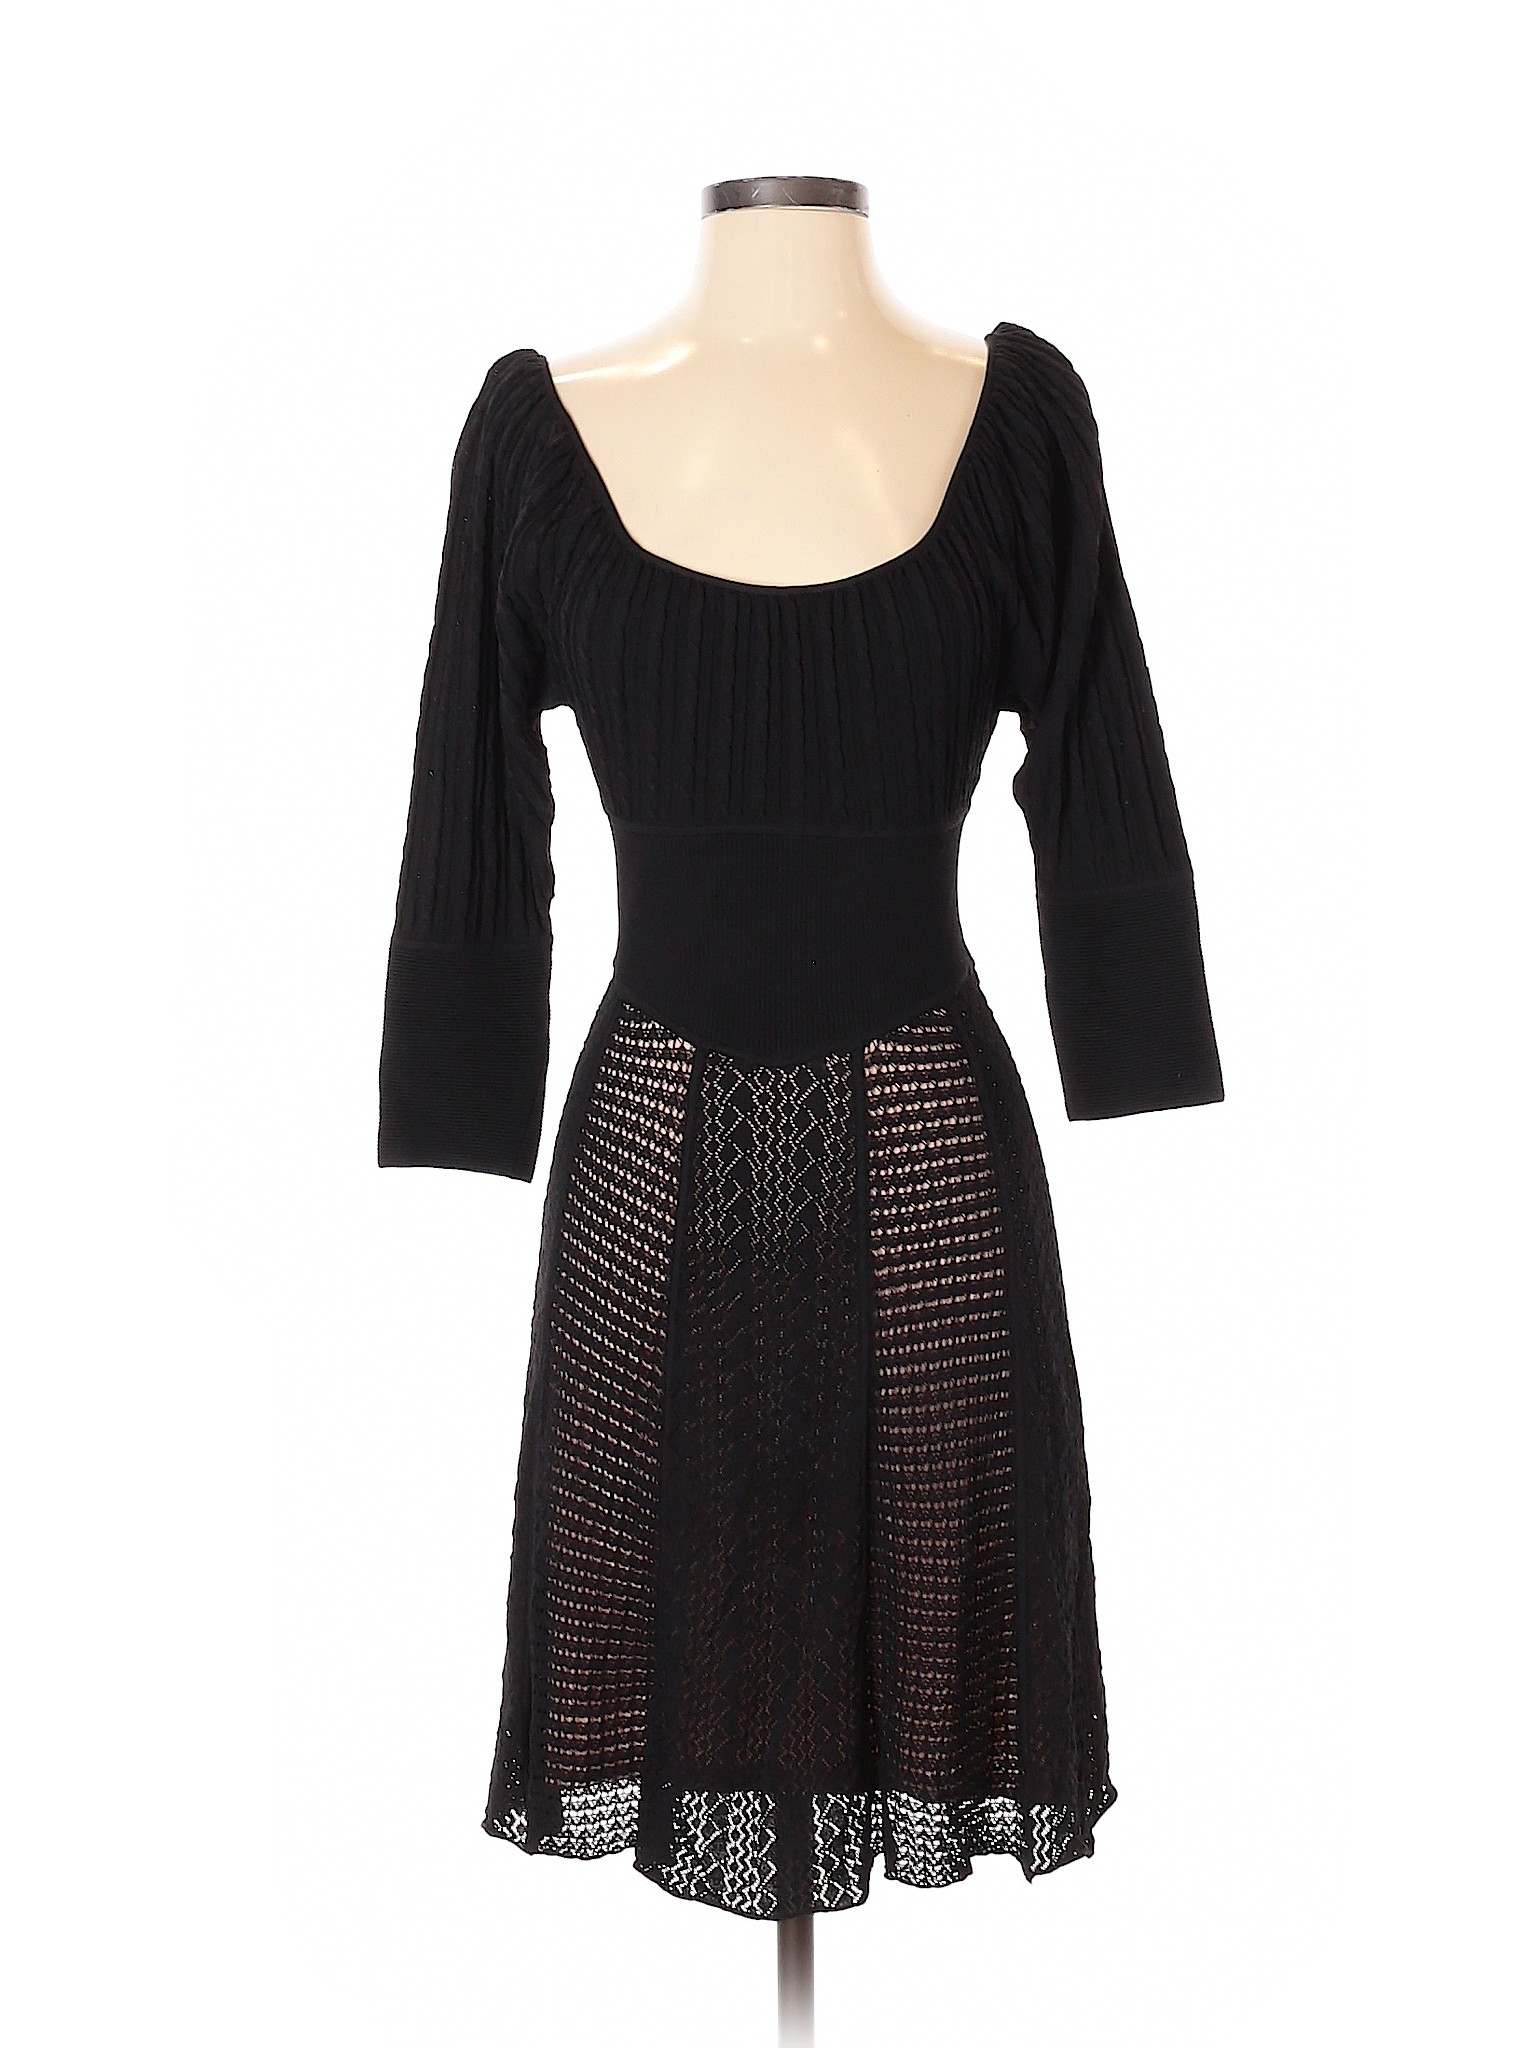 Catherine Malandrino Women Black Casual Dress S | eBay